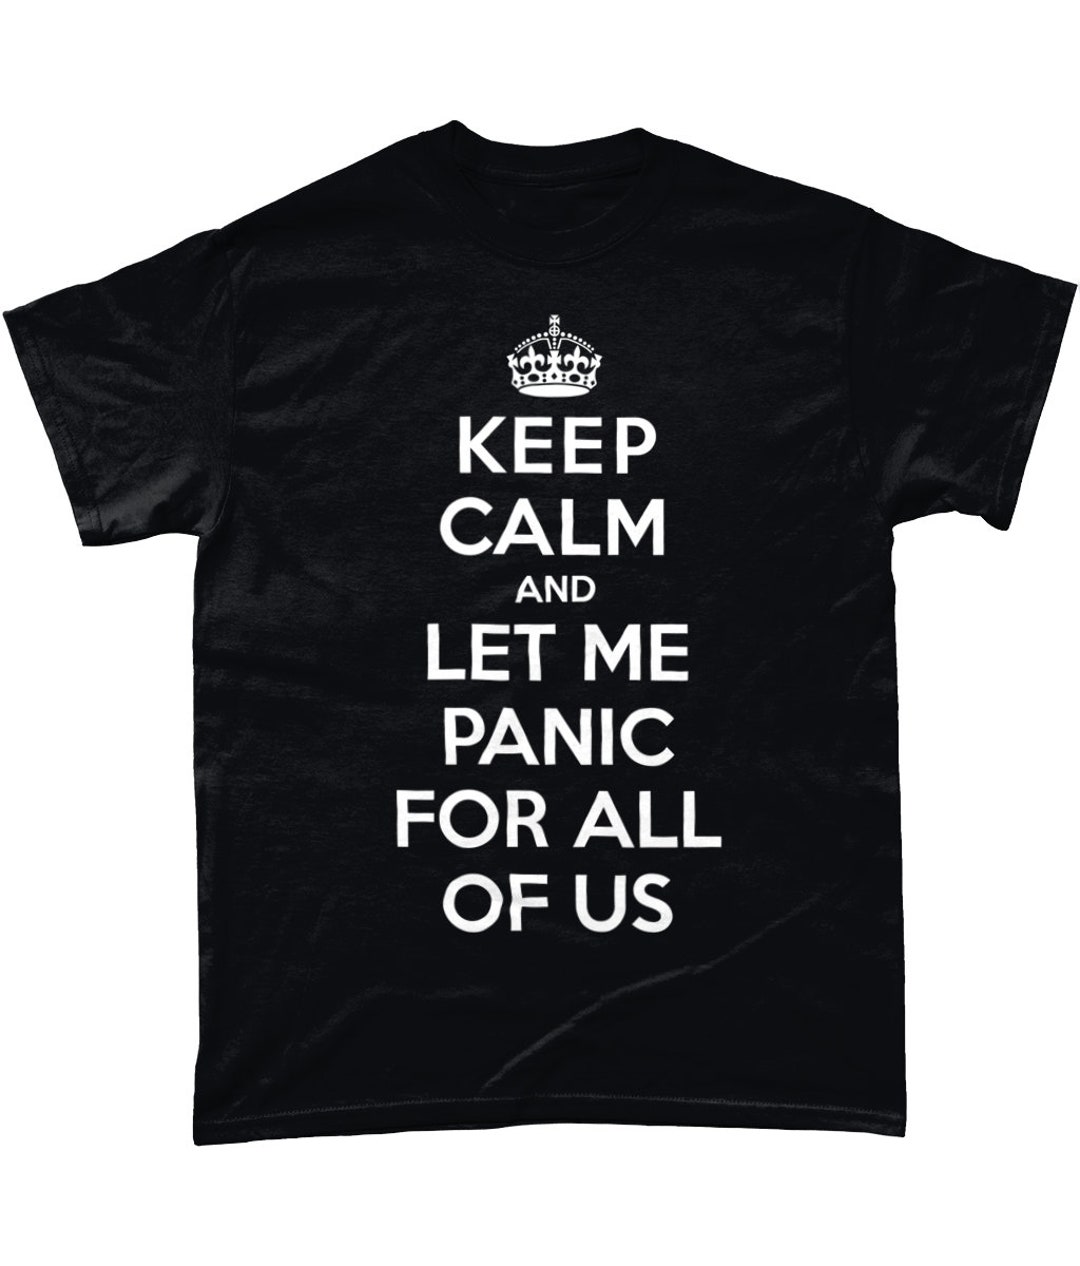 KEEP CALM 044 Funny Mens Funny Black T-shirts Novelty T Shirts image